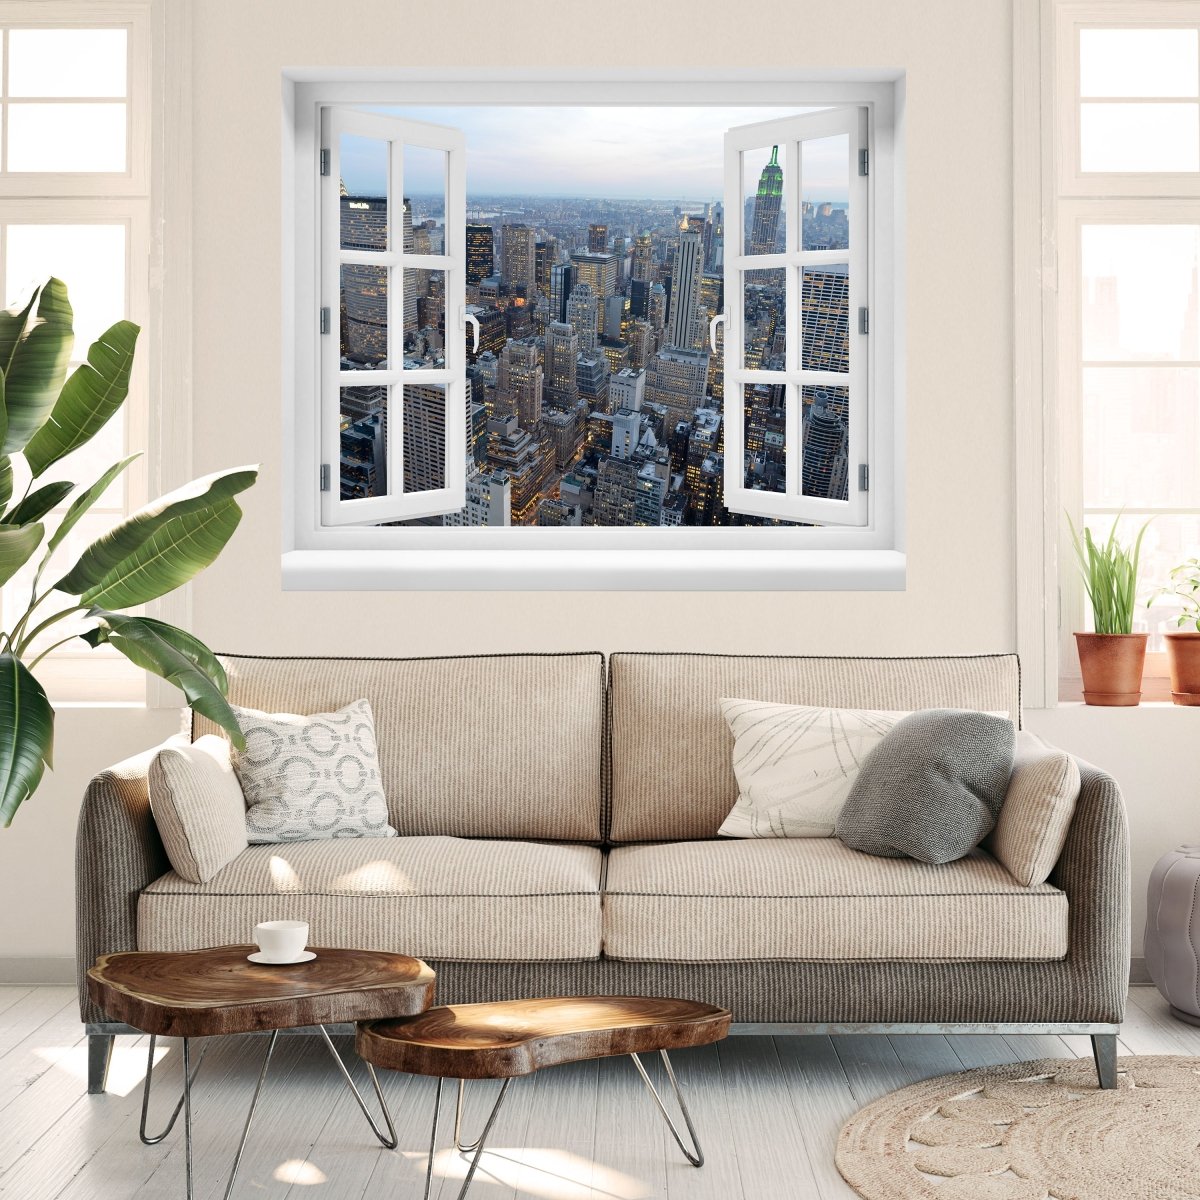 3D wall sticker New York Skyview - Wall Decal M0254